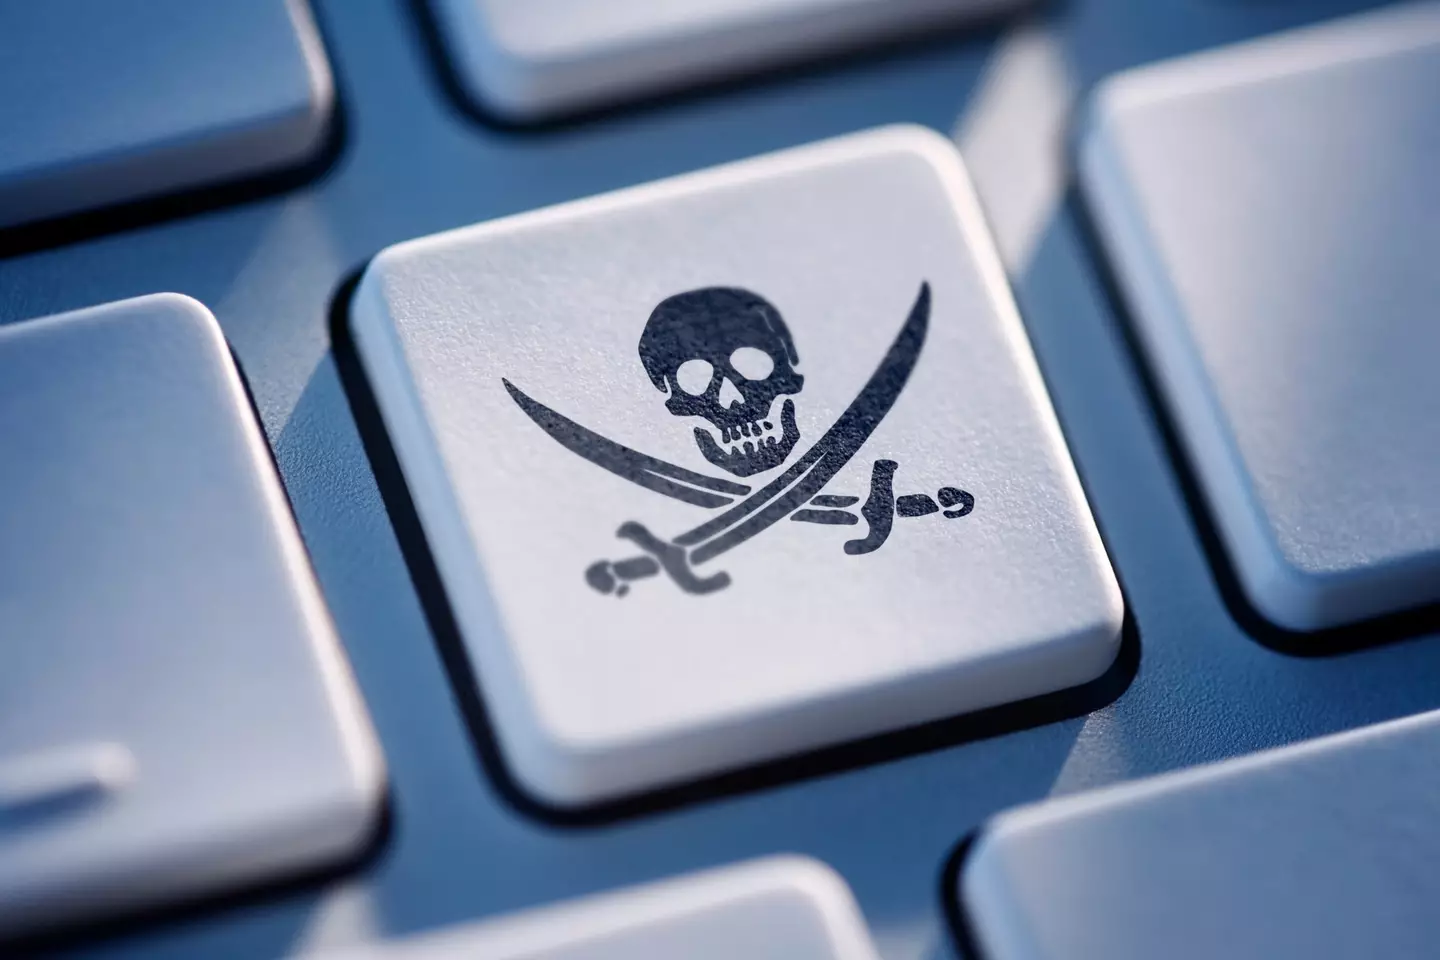 Piracy costs billions.